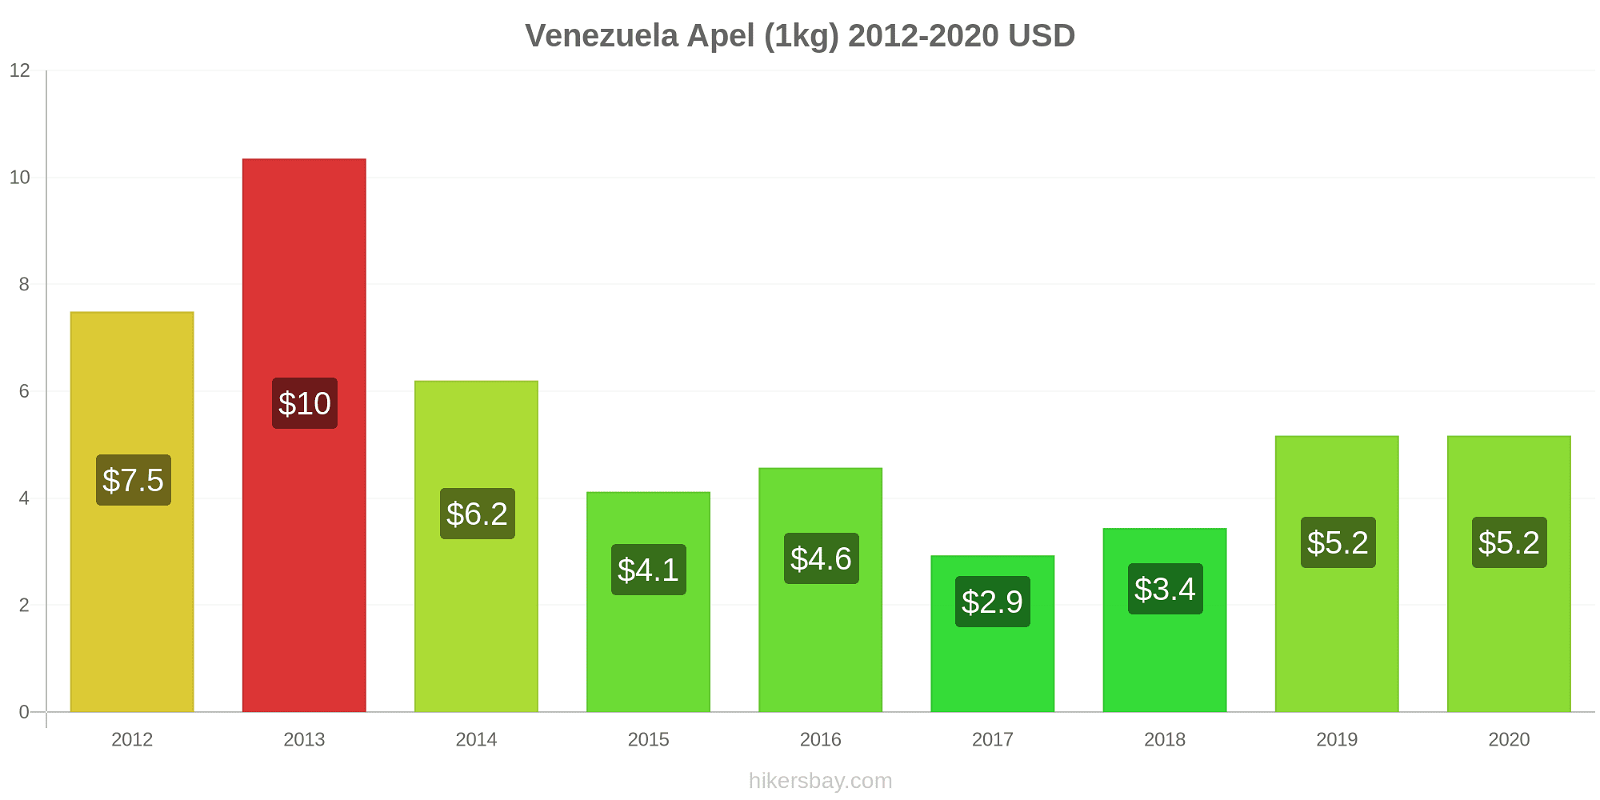 Venezuela perubahan harga Apel (1kg) hikersbay.com